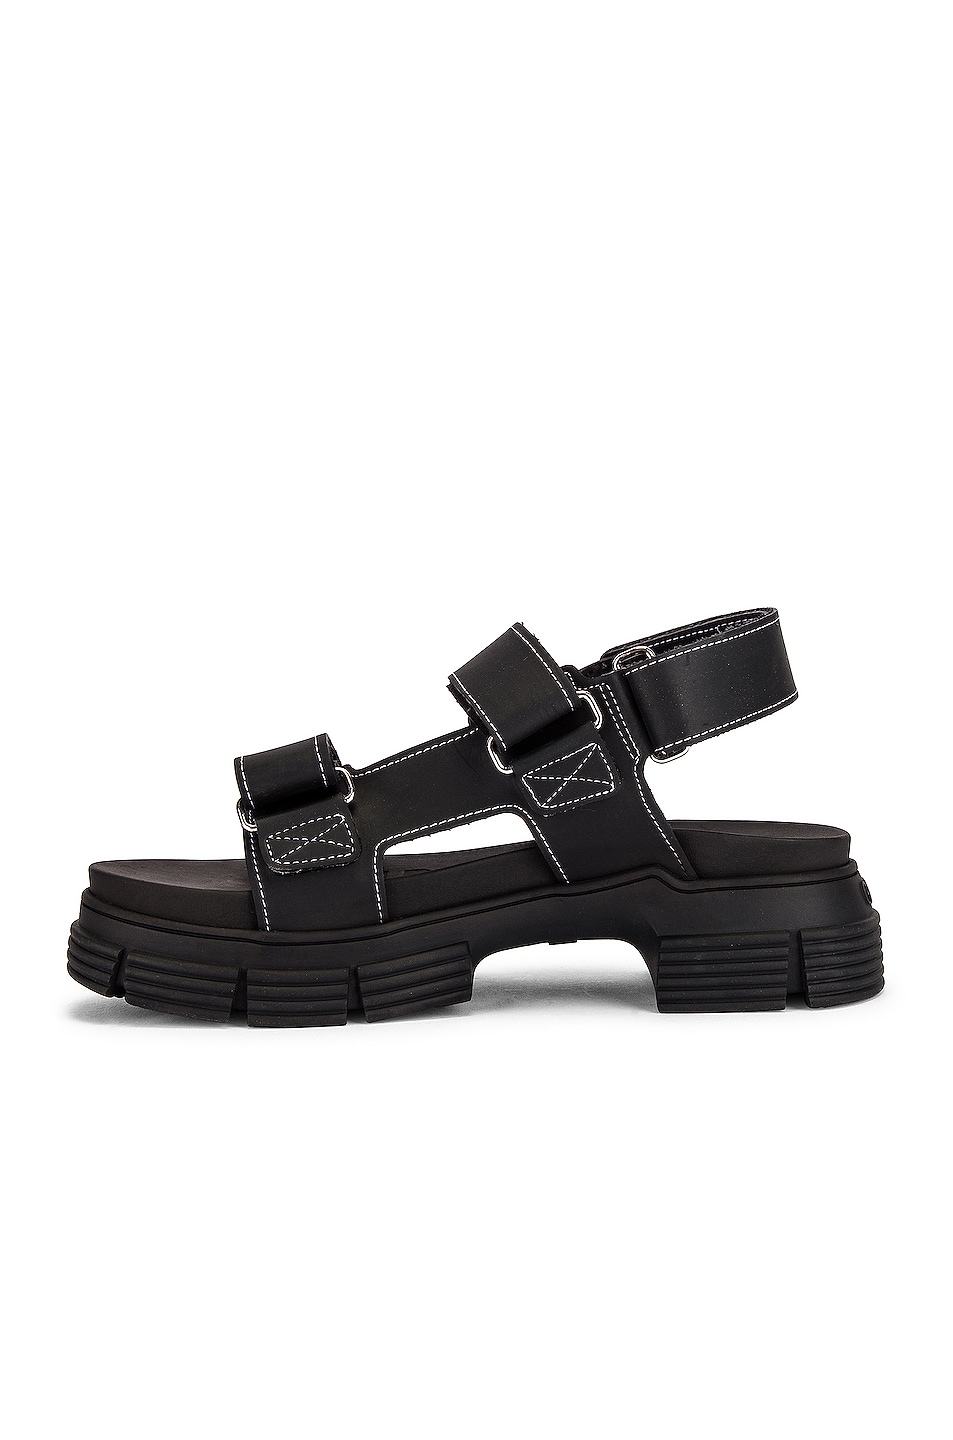 Ganni Recycled Rubber Sandal in Black | FWRD